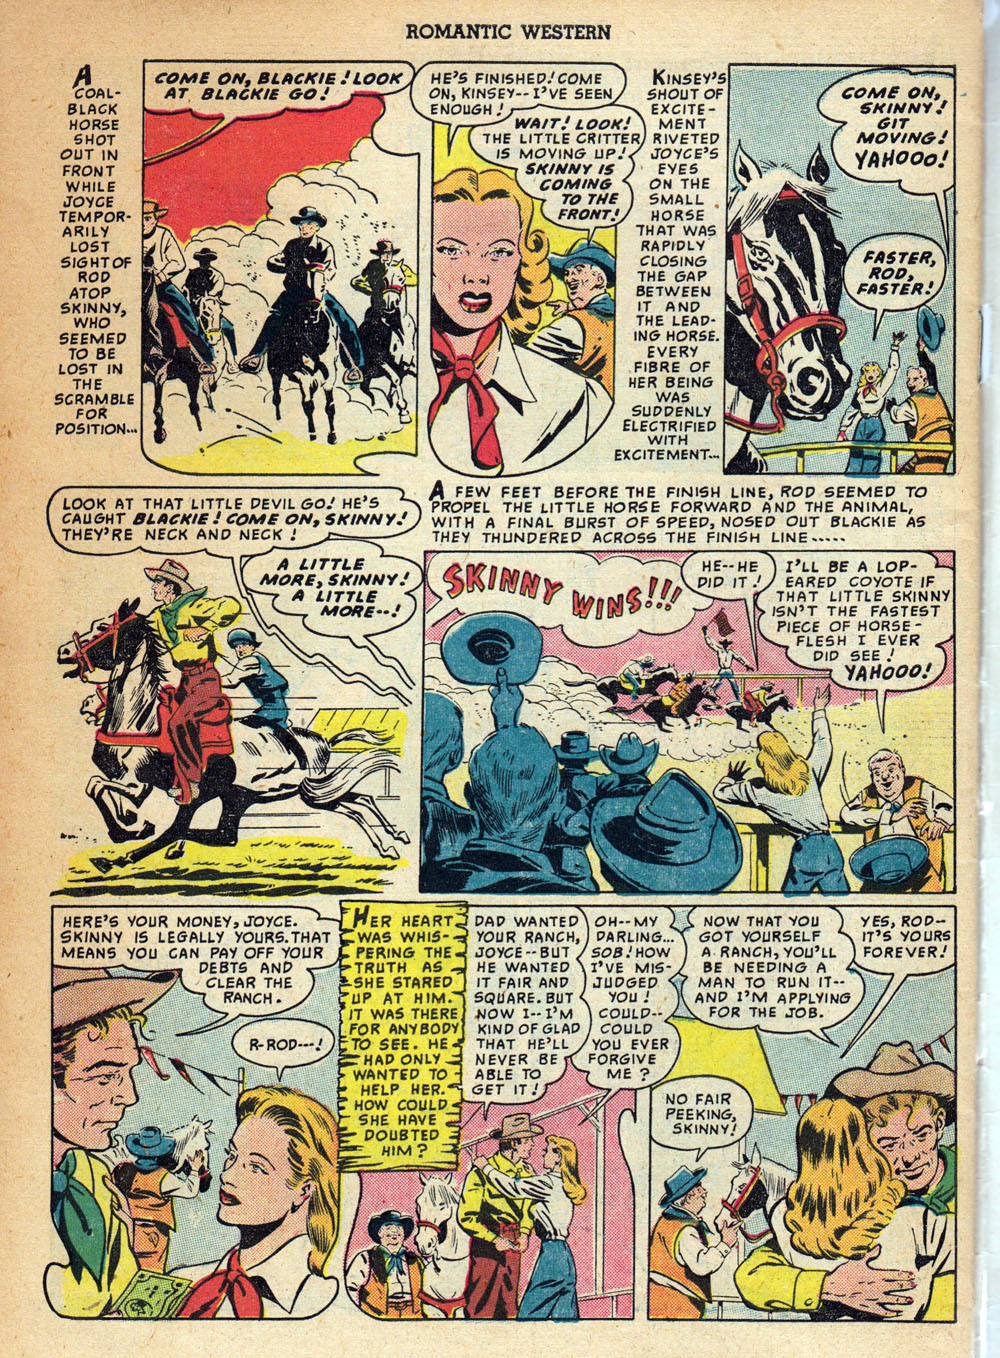 Read online Romantic Western comic -  Issue #2 - 34